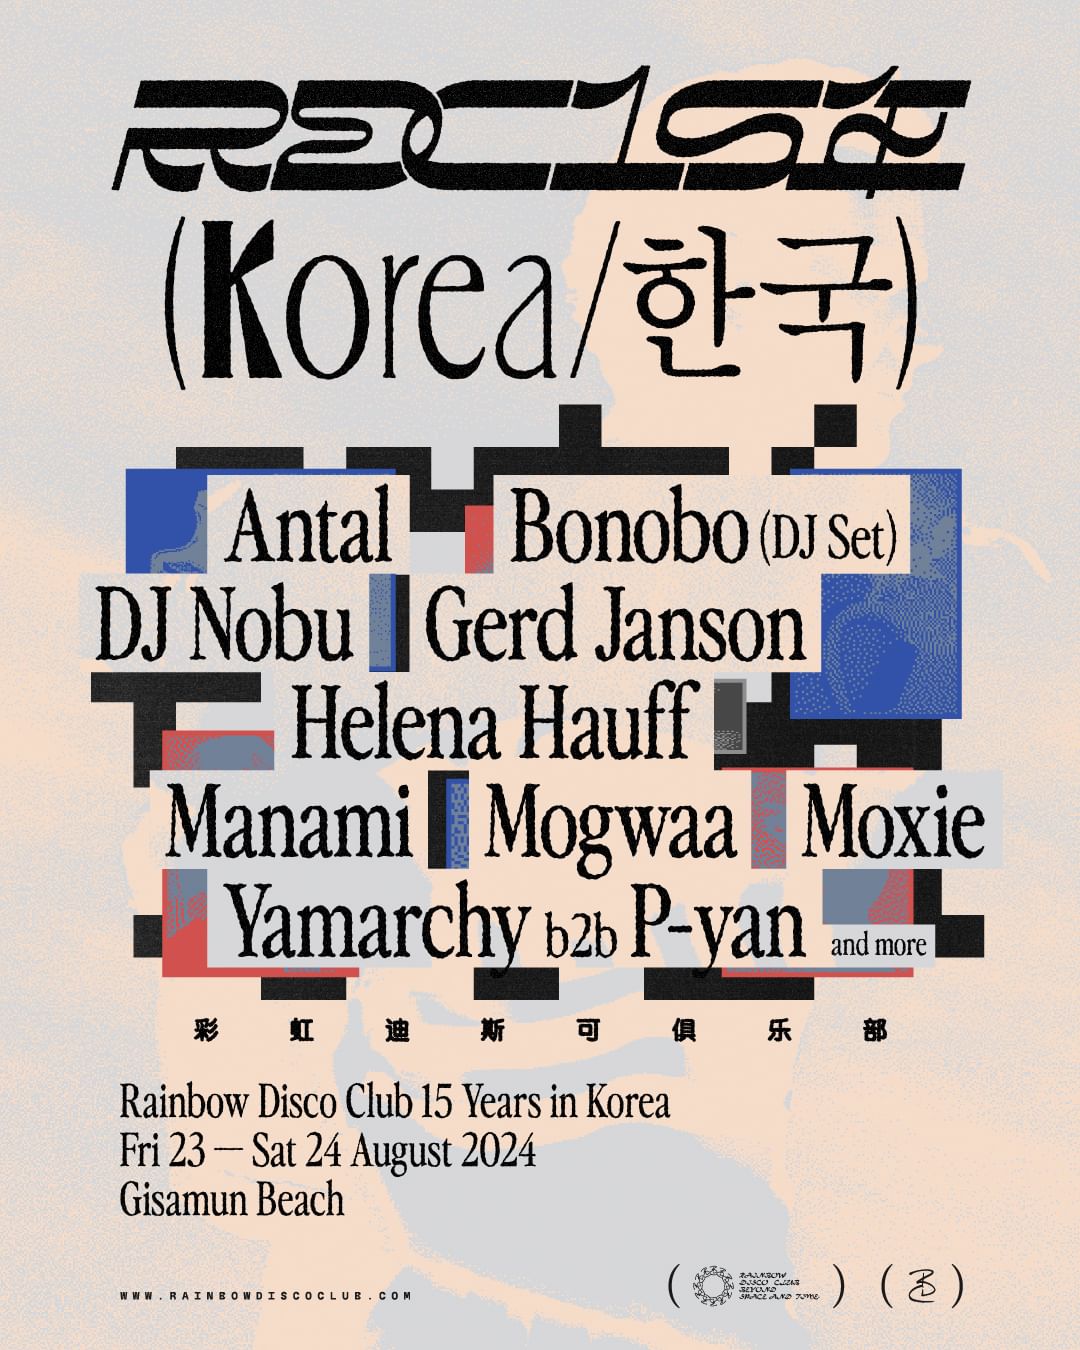 Rainbow Disco Club 15 Years in Korea